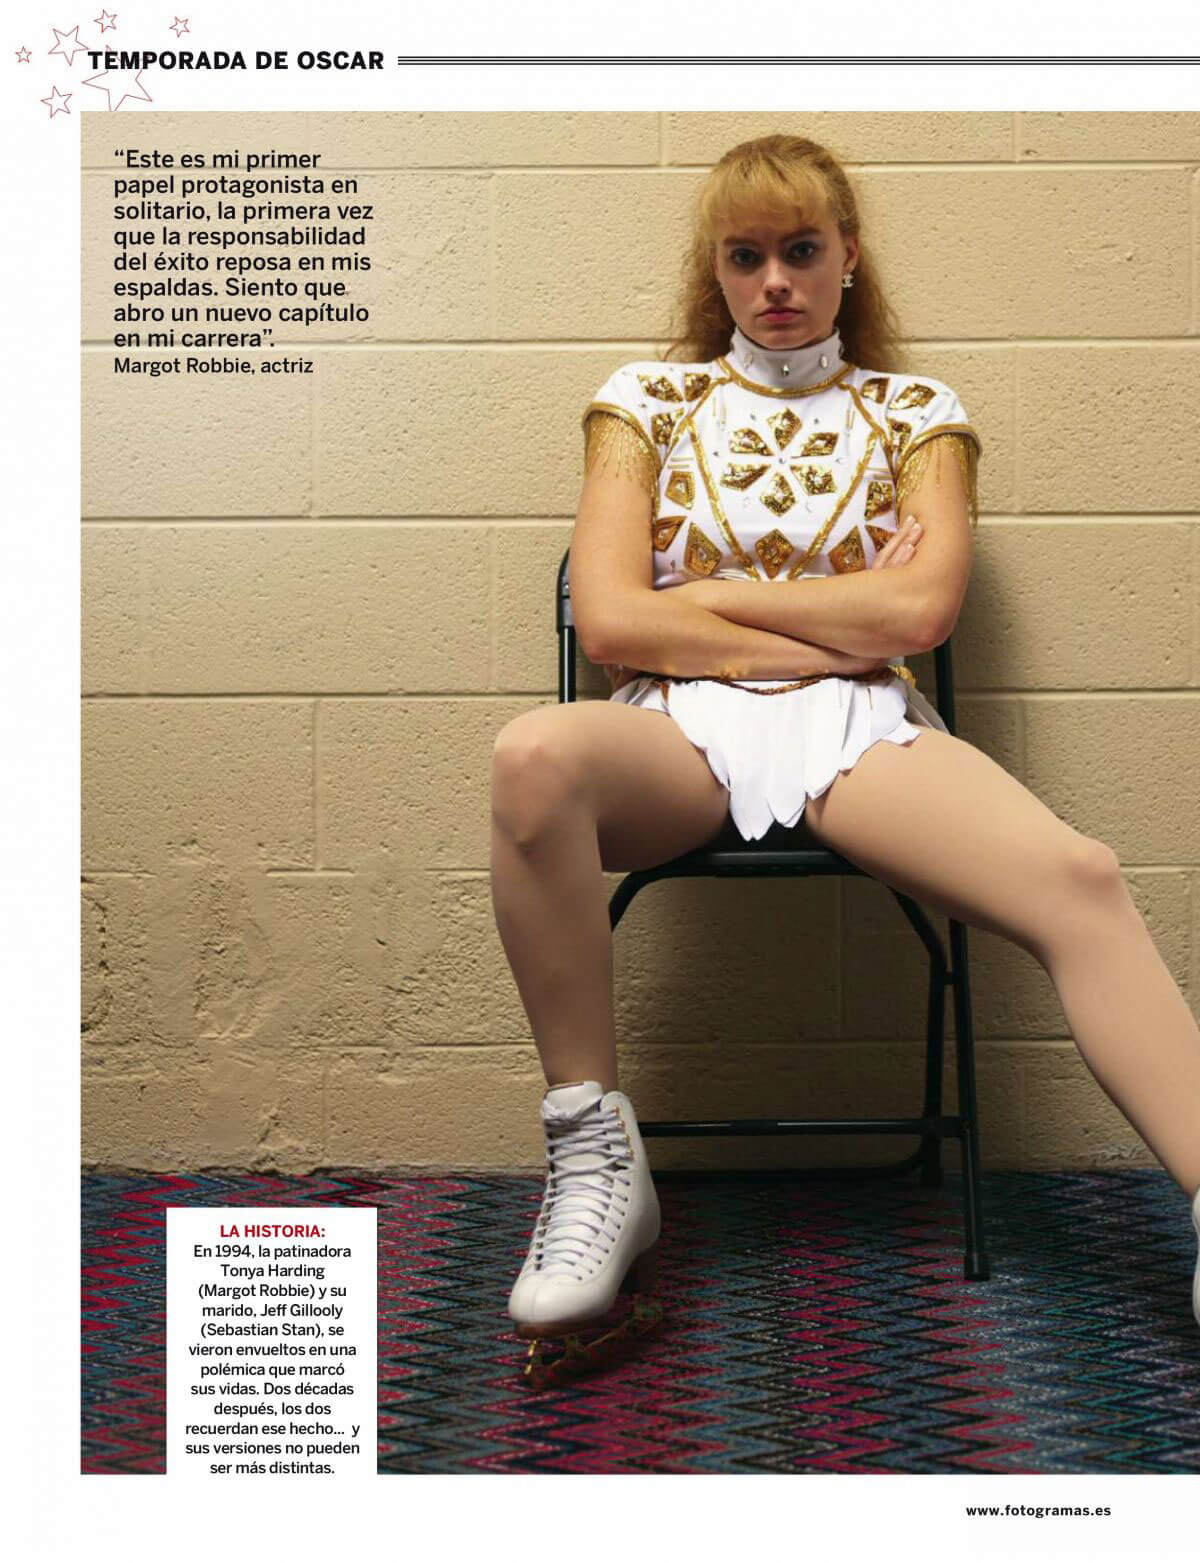 Margot Robbie Stills In Fotogramas Magazine February